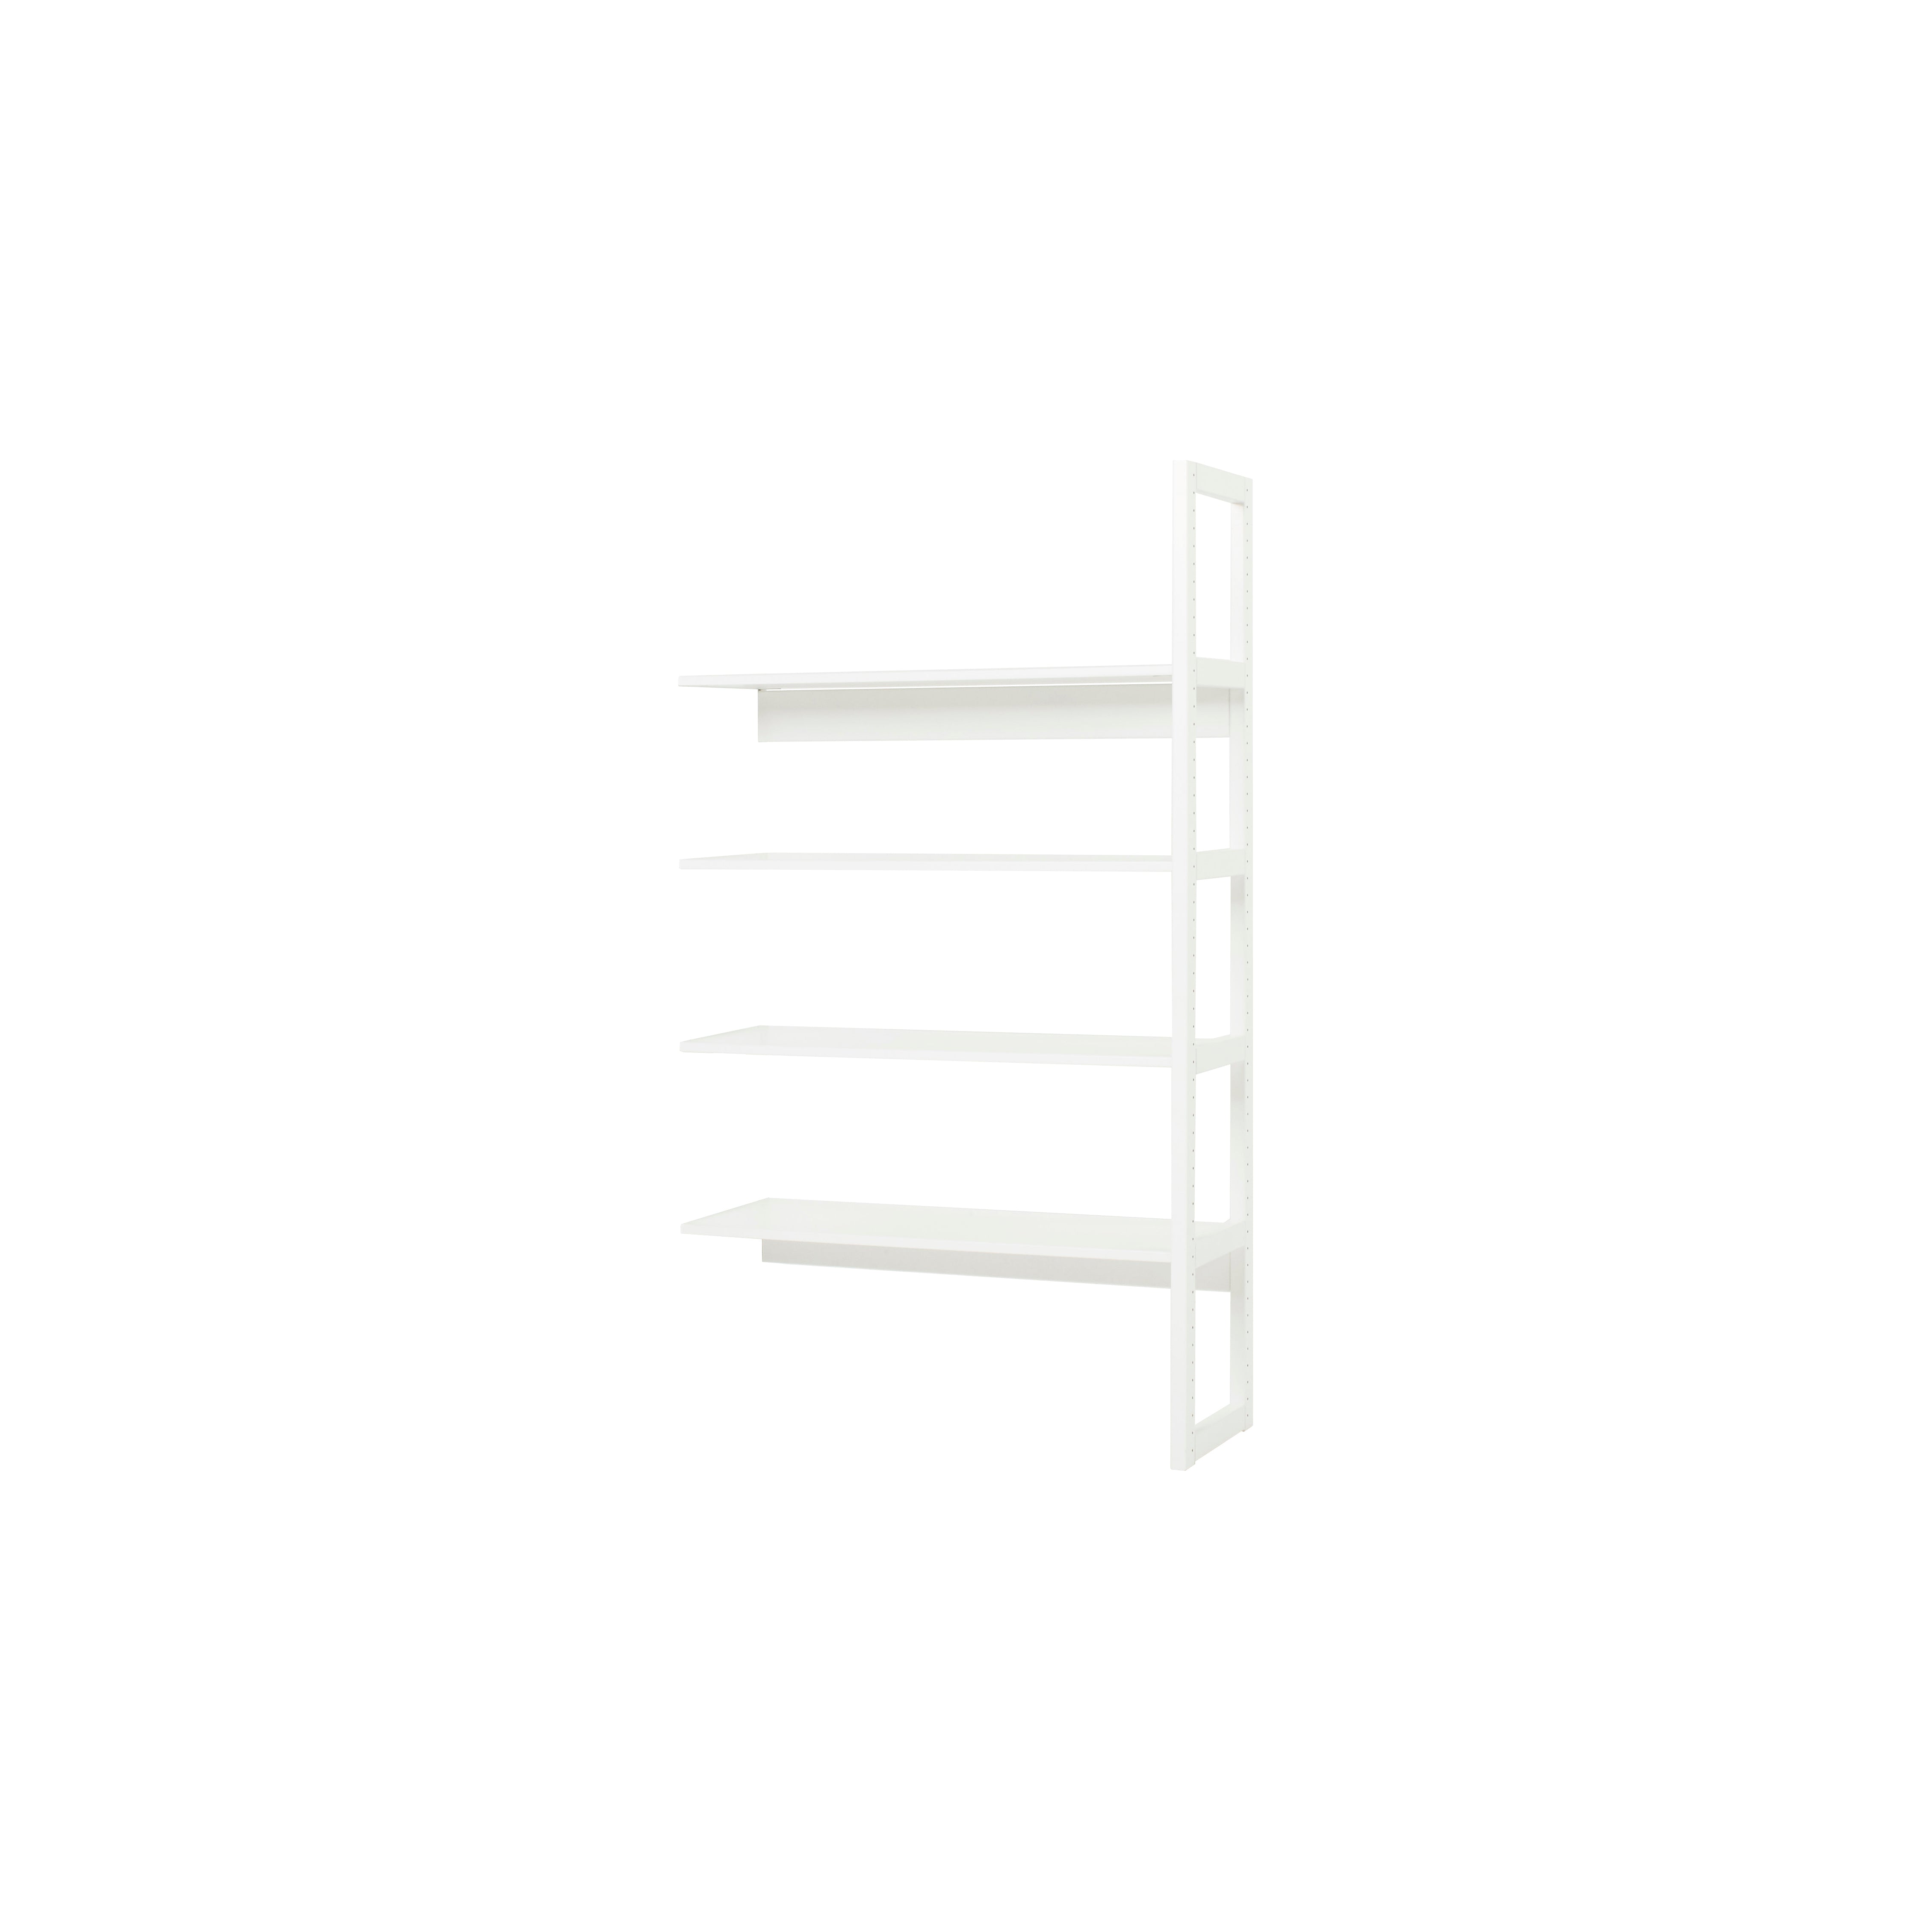 Hoppekids STOREY half section with 4 shelves, 80 cm, White